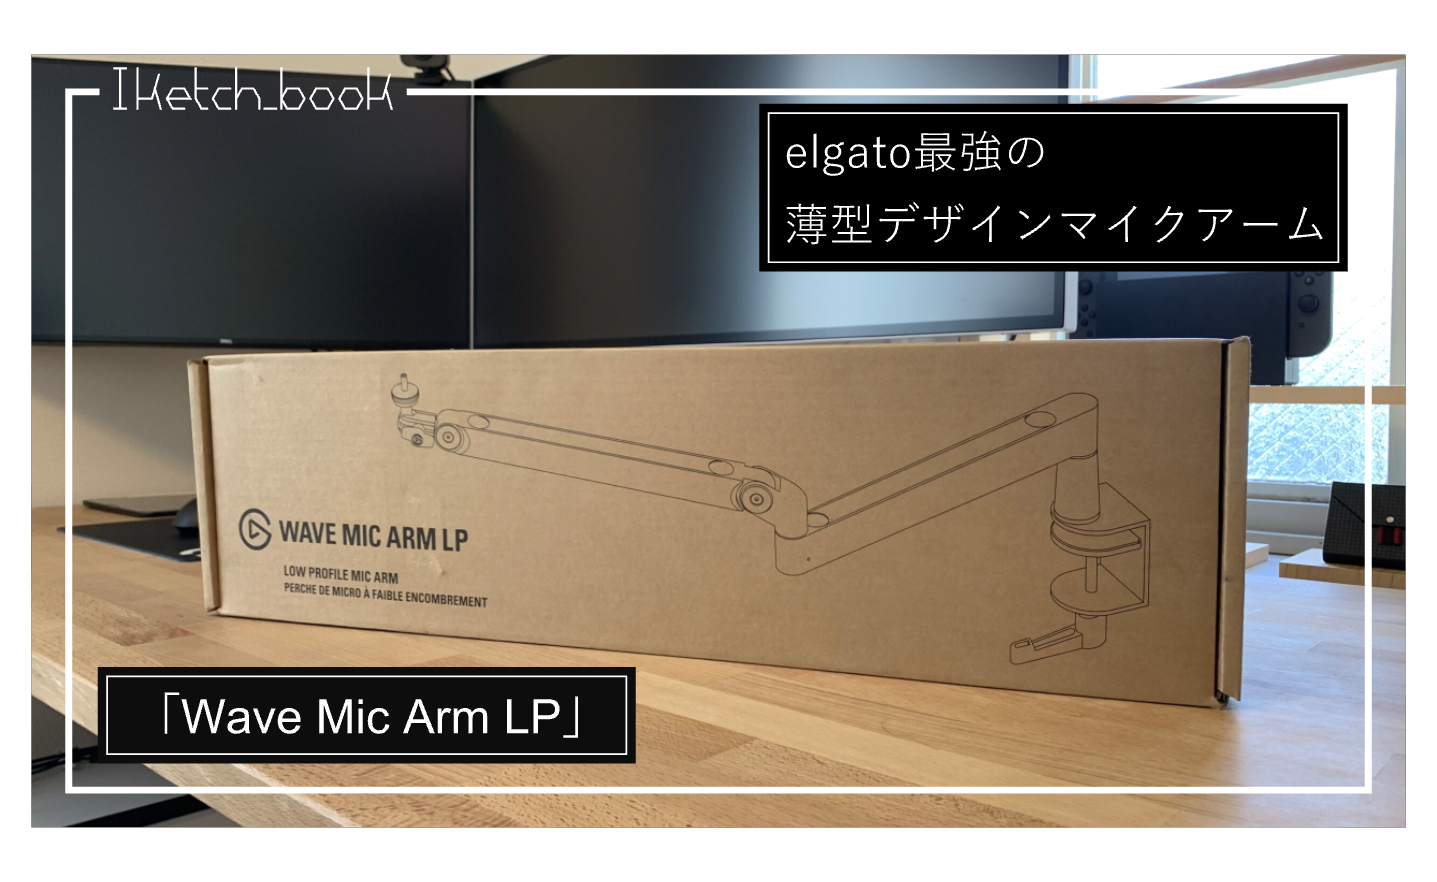 Elgato Wave Mic Arm LP 薄型デザインマイクアーム